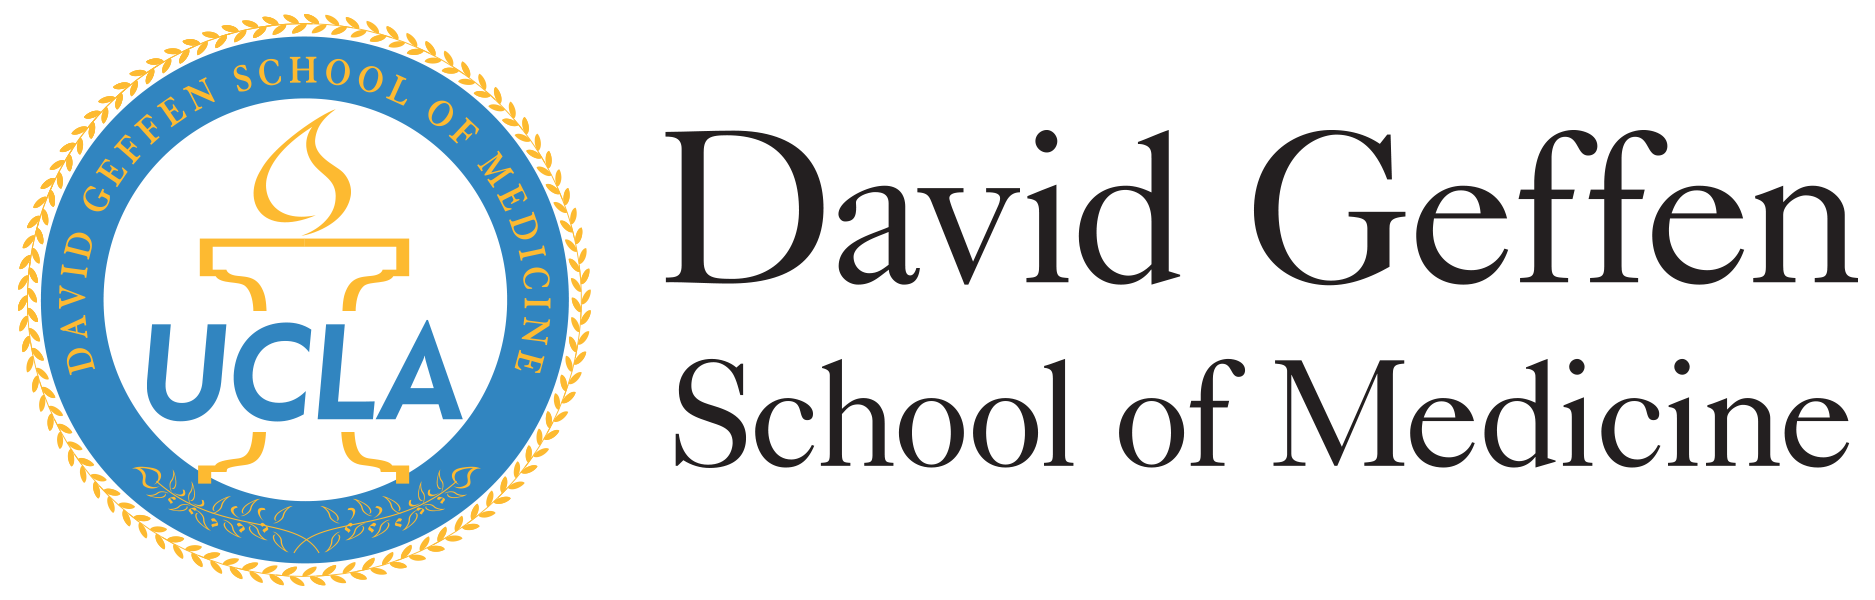 David Geffen School of Medicine logo